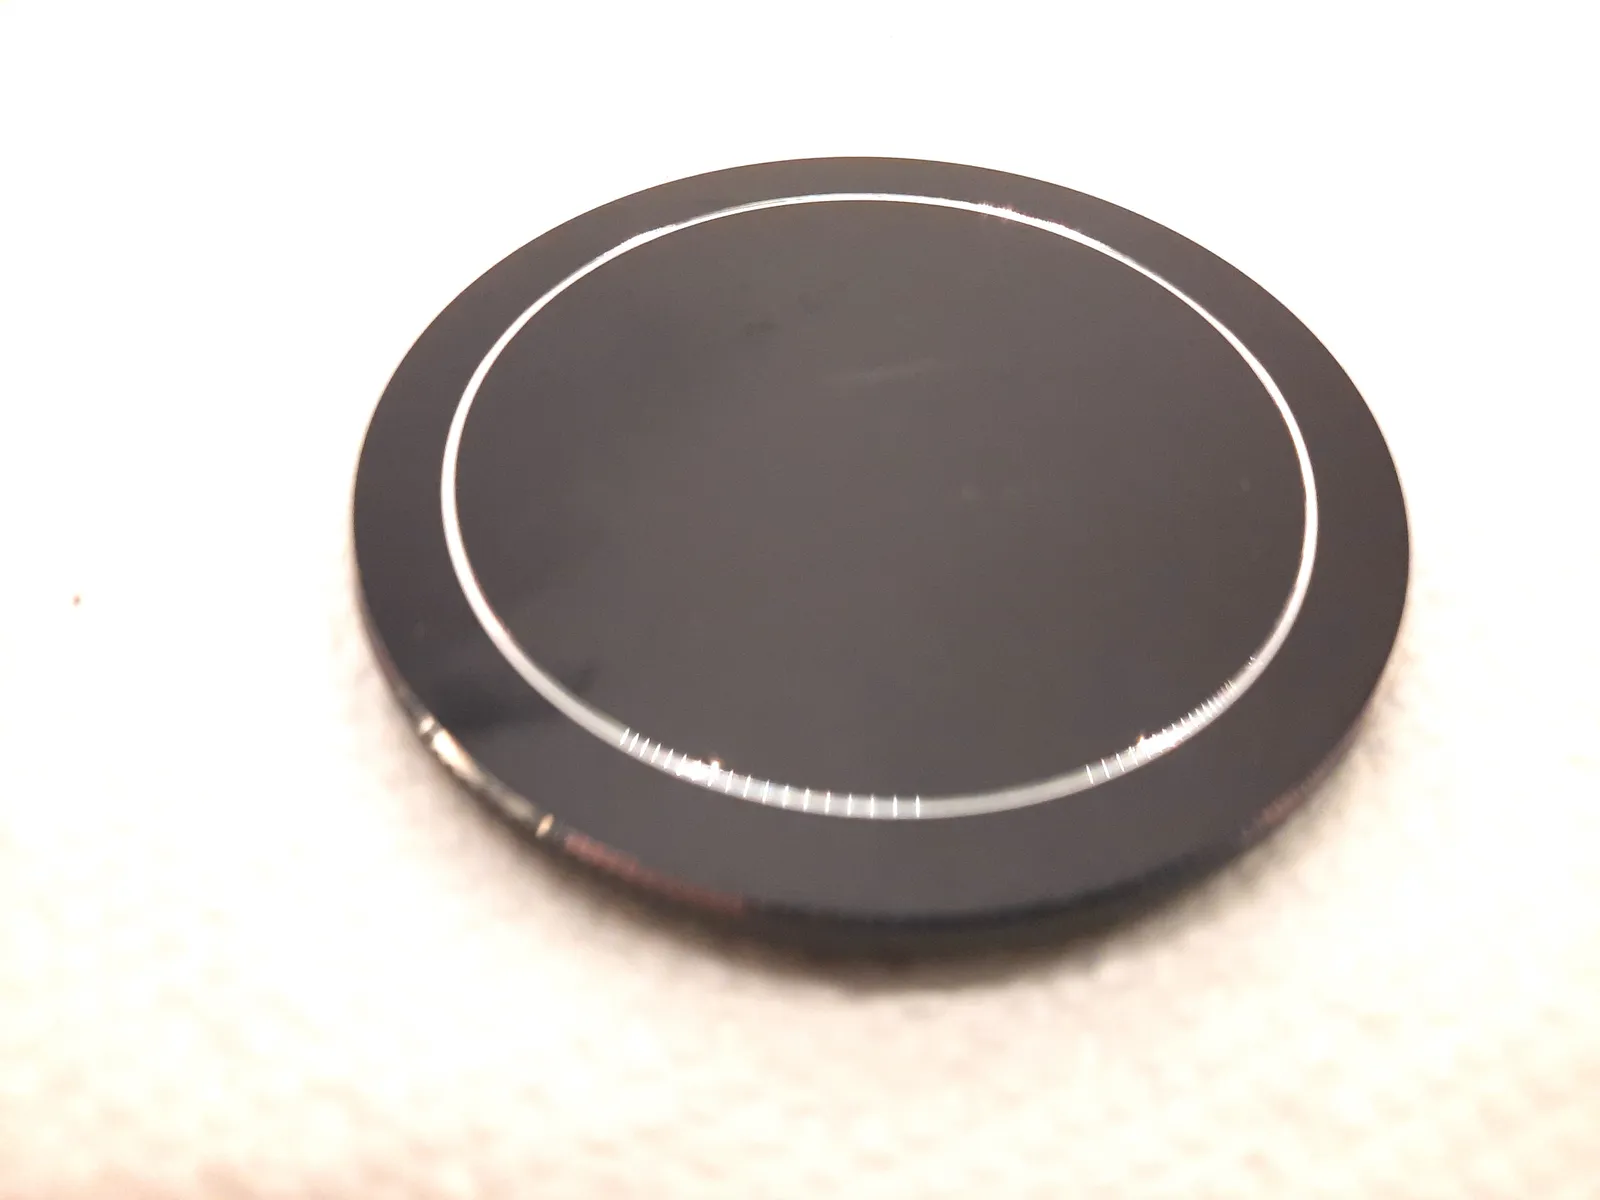 Vintage Black Metal Front Lens Cap - 58mm Diameter - Thread Mount